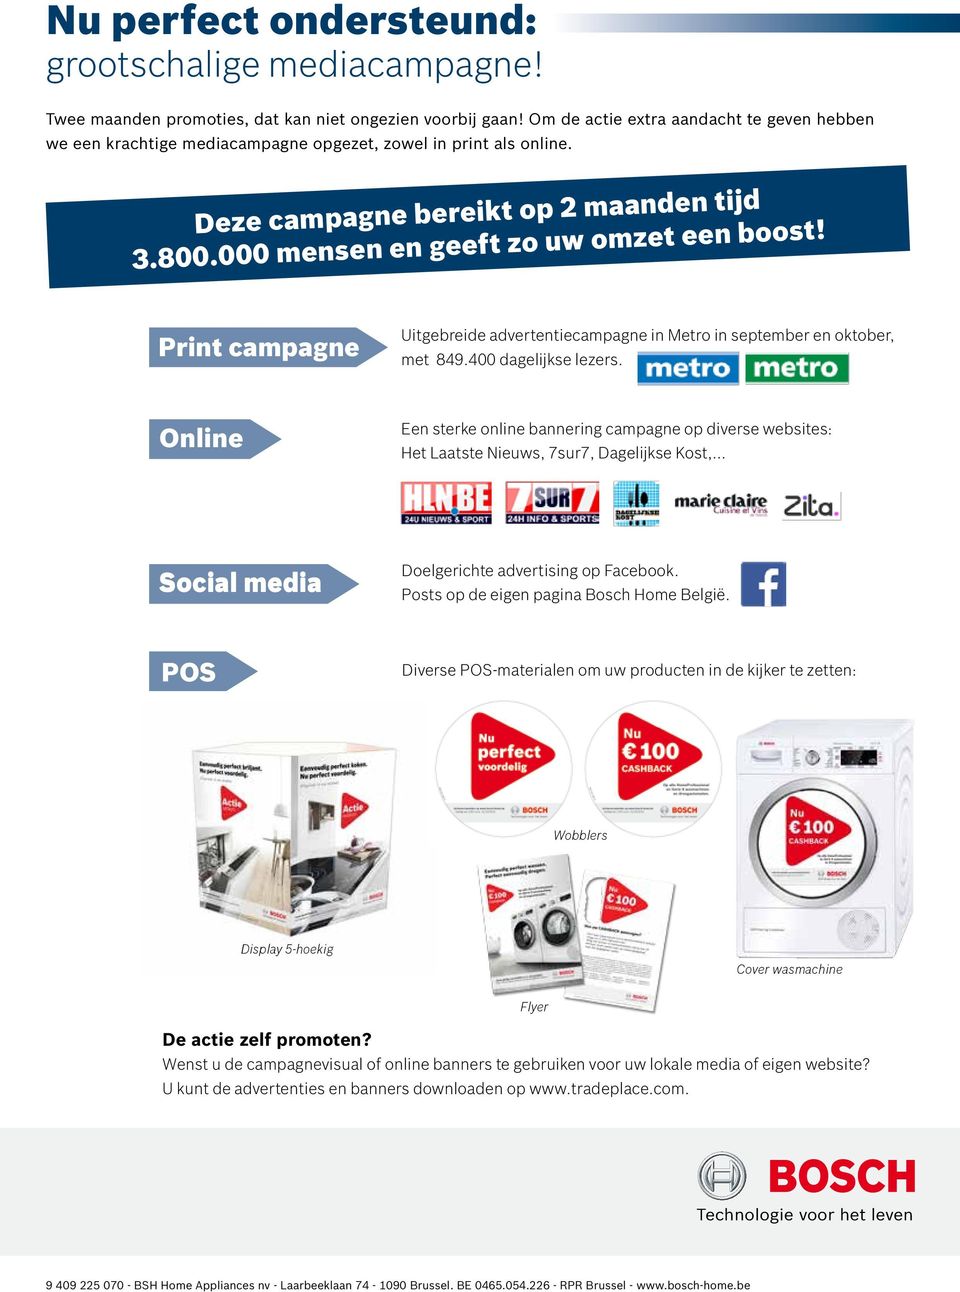 Print campagne Uitgebreide advertentiecampagne in Metro in september en oktober, met 849.400 dagelijkse lezers.